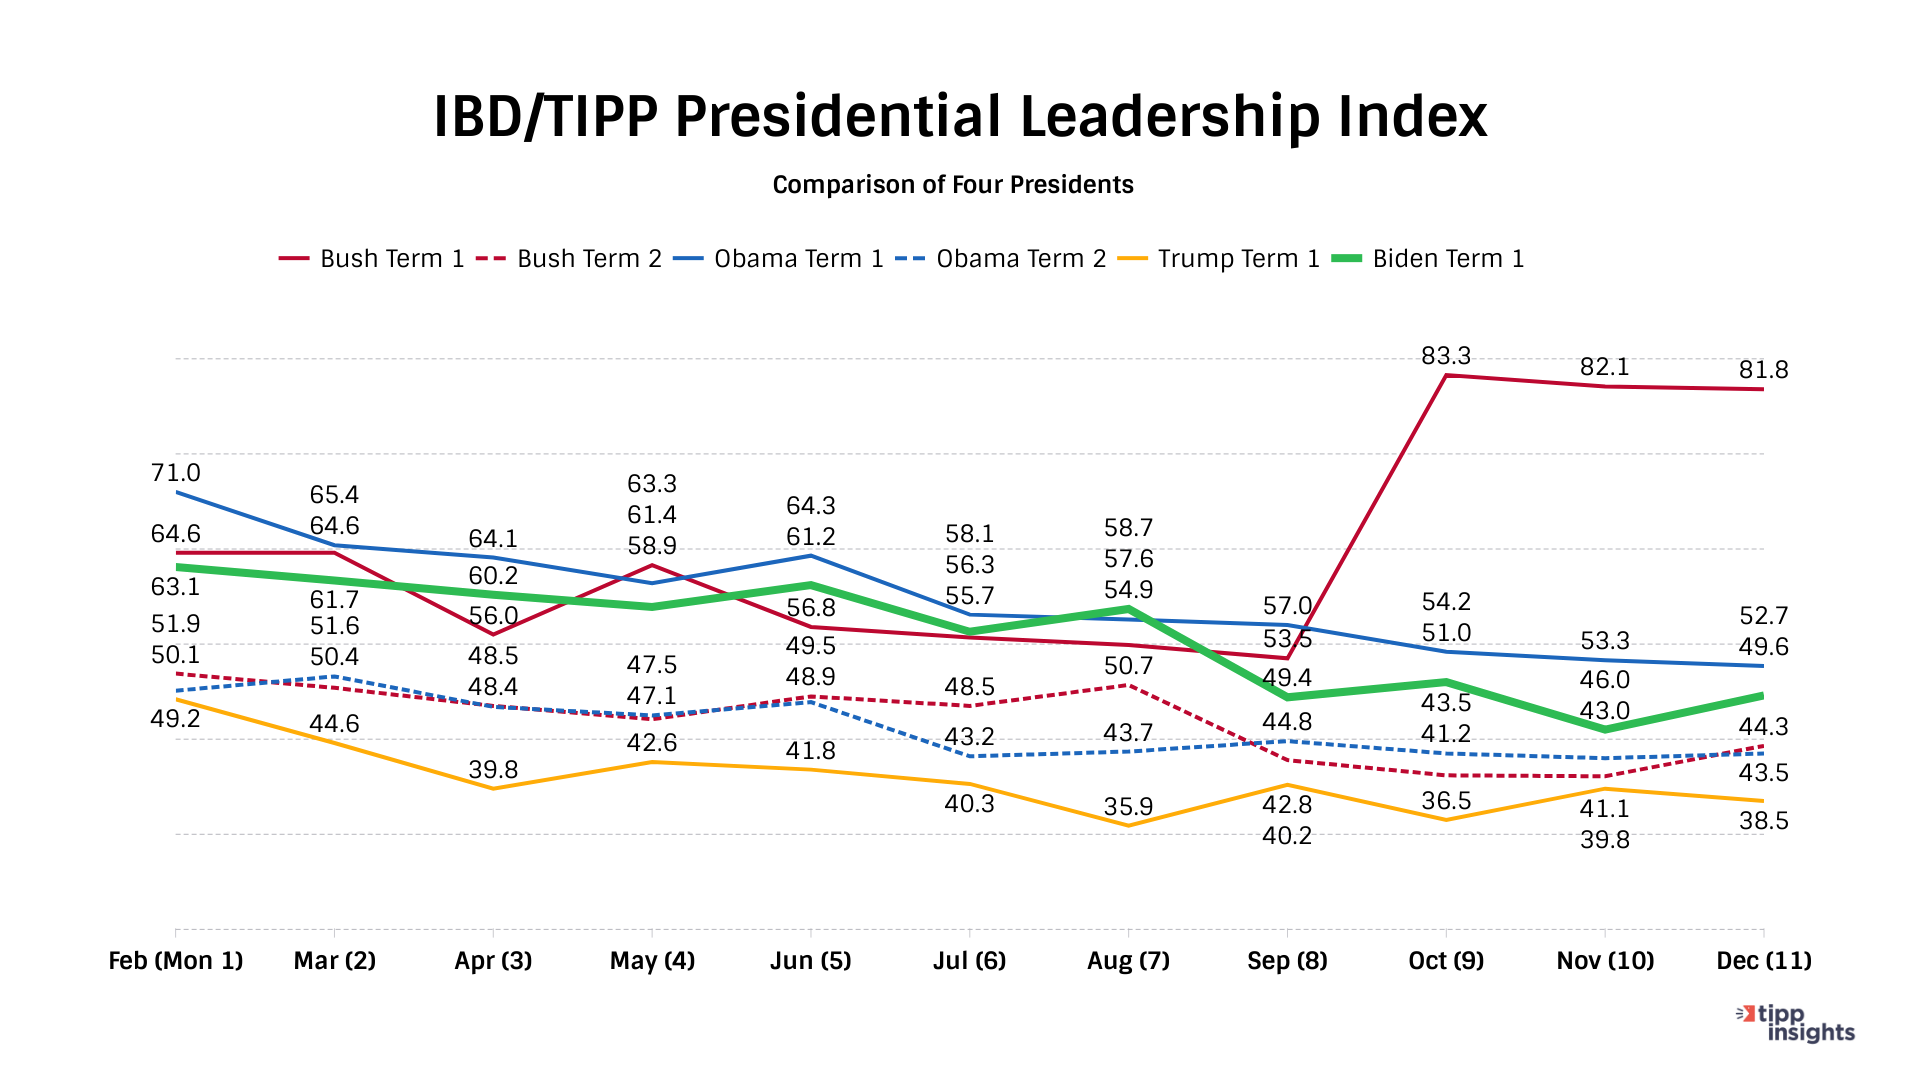 IBD/TIPP Poll Results: Comparison of presdential leadership index Bush term 1 - Biden term 1